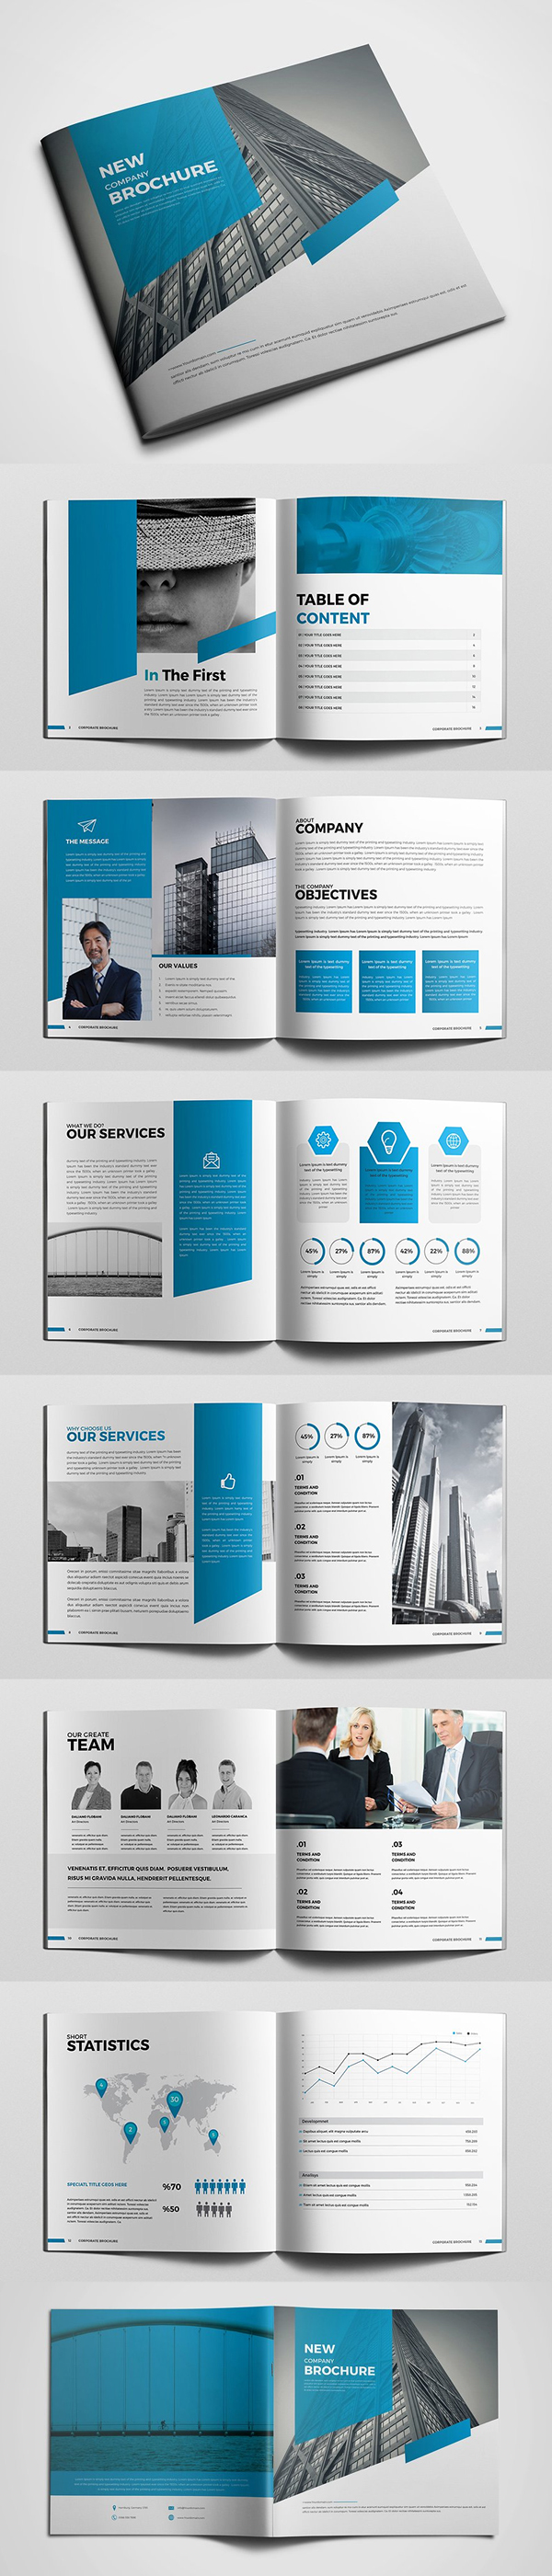 100 Professional Corporate Brochure Templates - 57